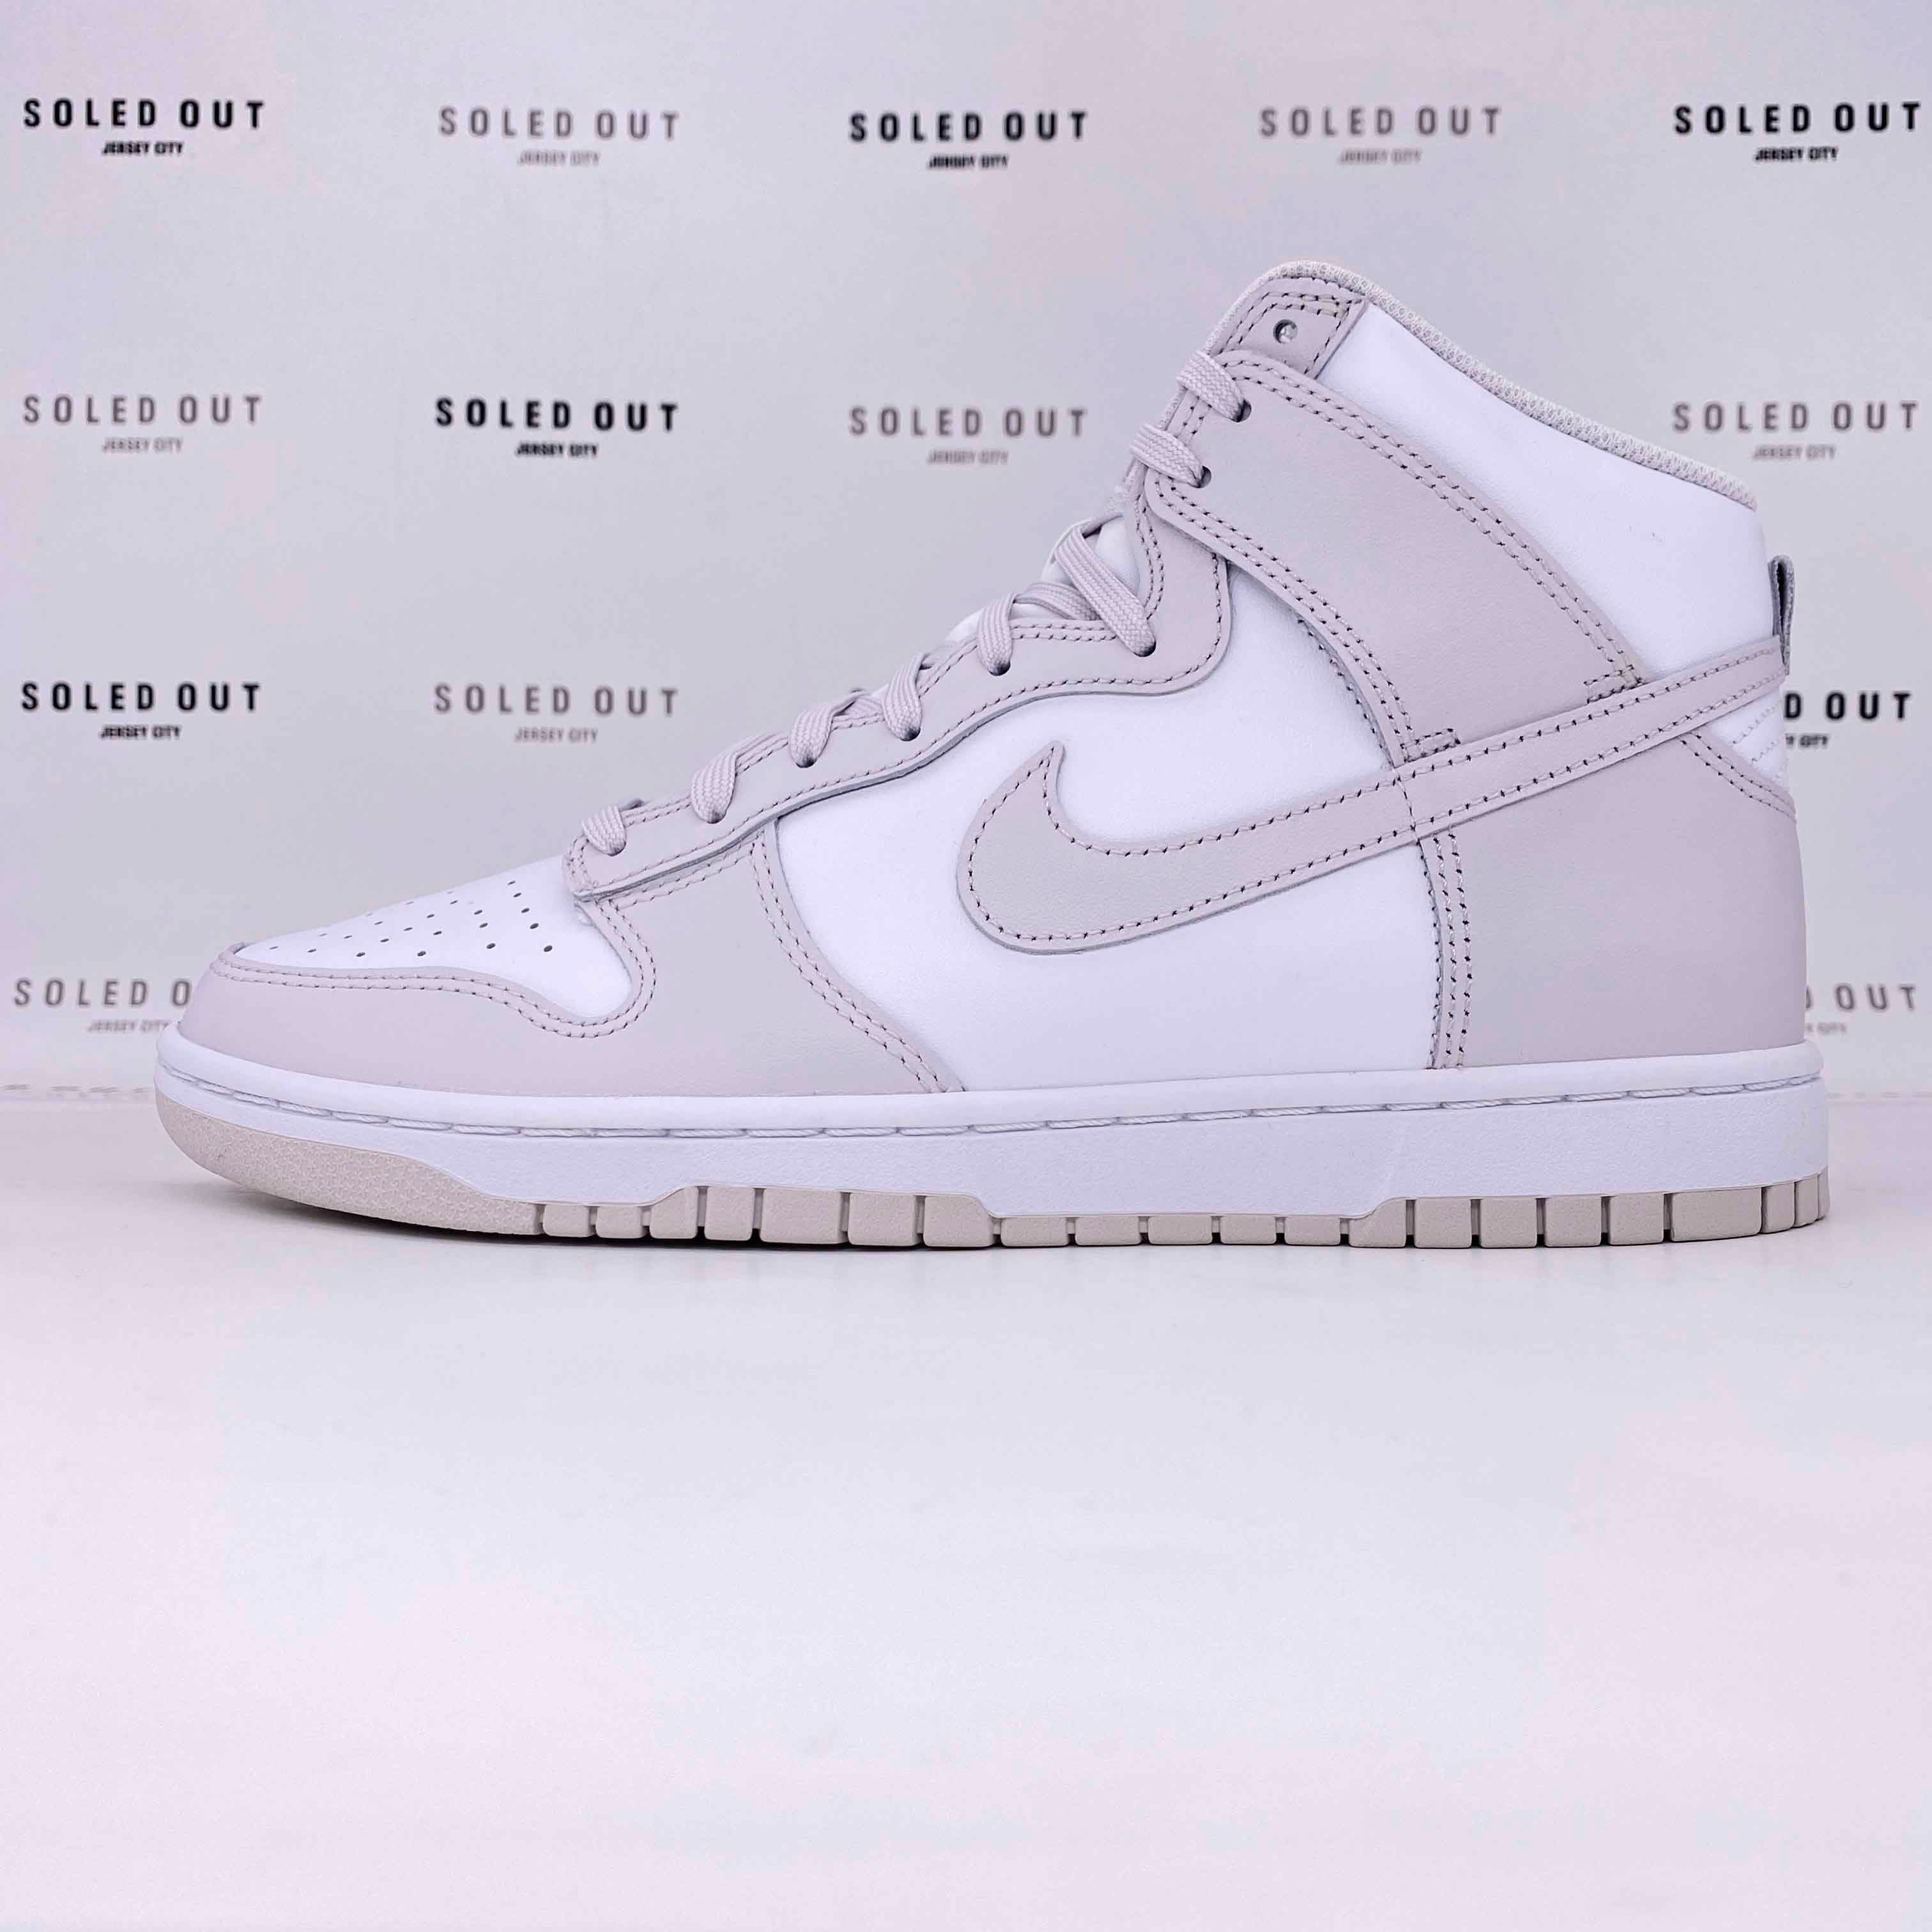 Nike Dunk High Retro "Vast Grey" 2021 New Size 9.5